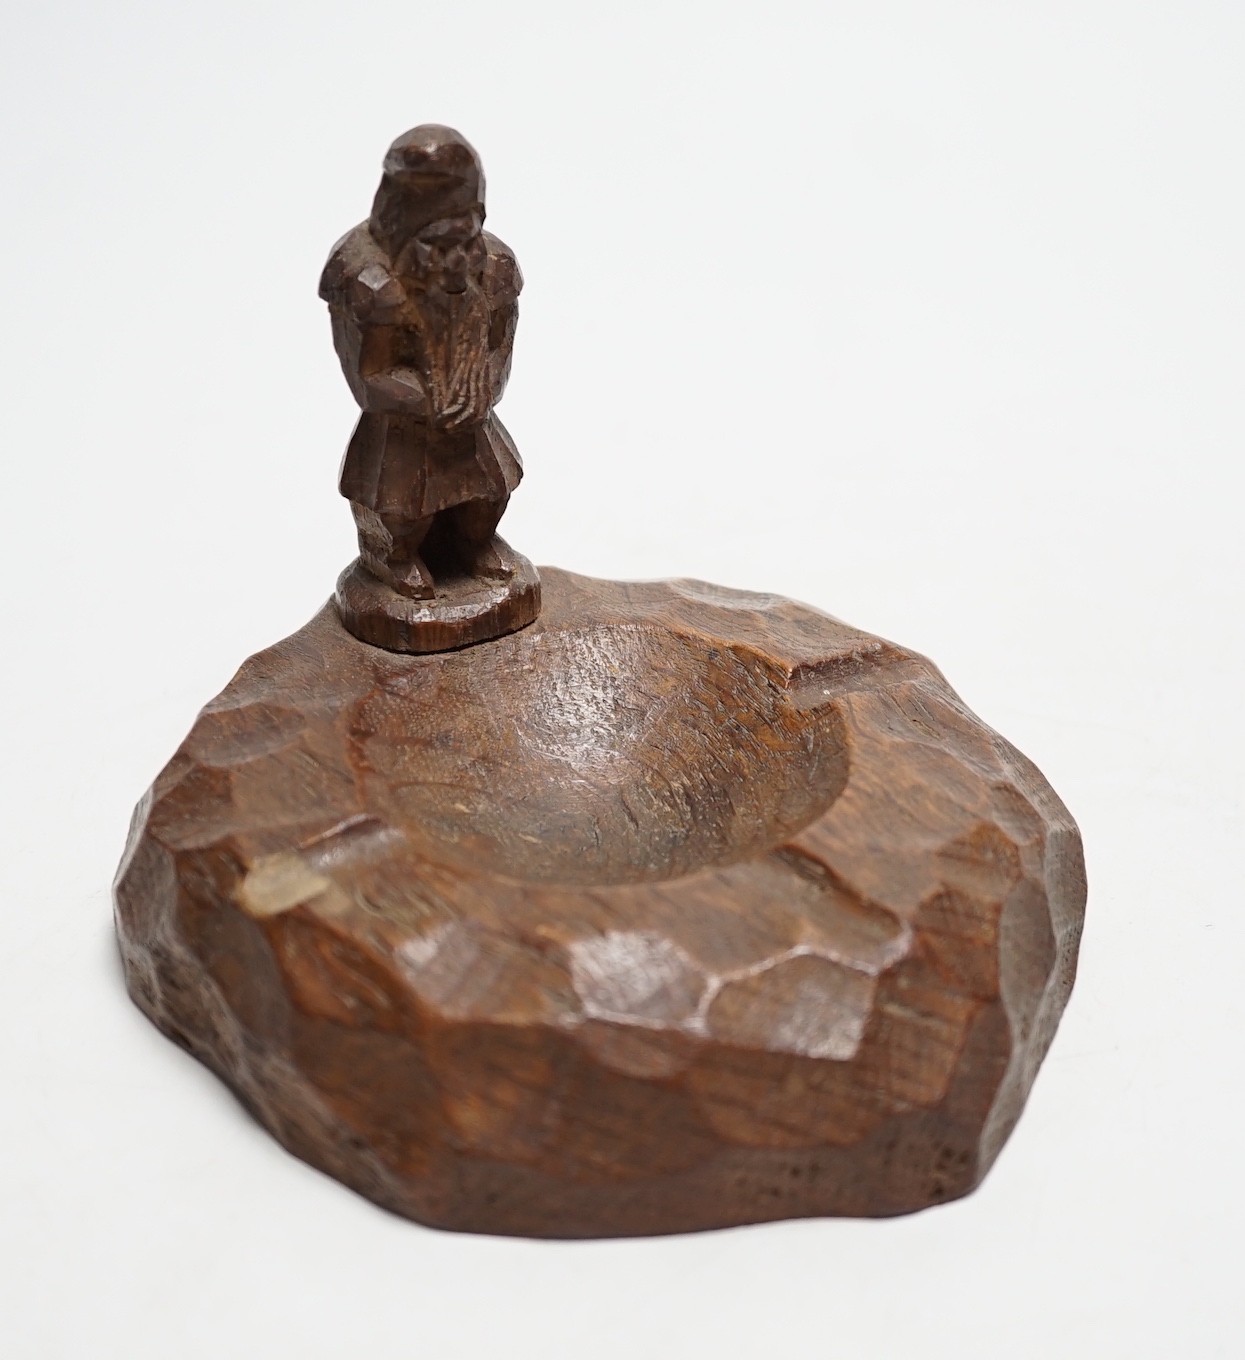 A Thomas ‘The Gnomeman’ Whittaker carved oak ash tray, 11cm tall